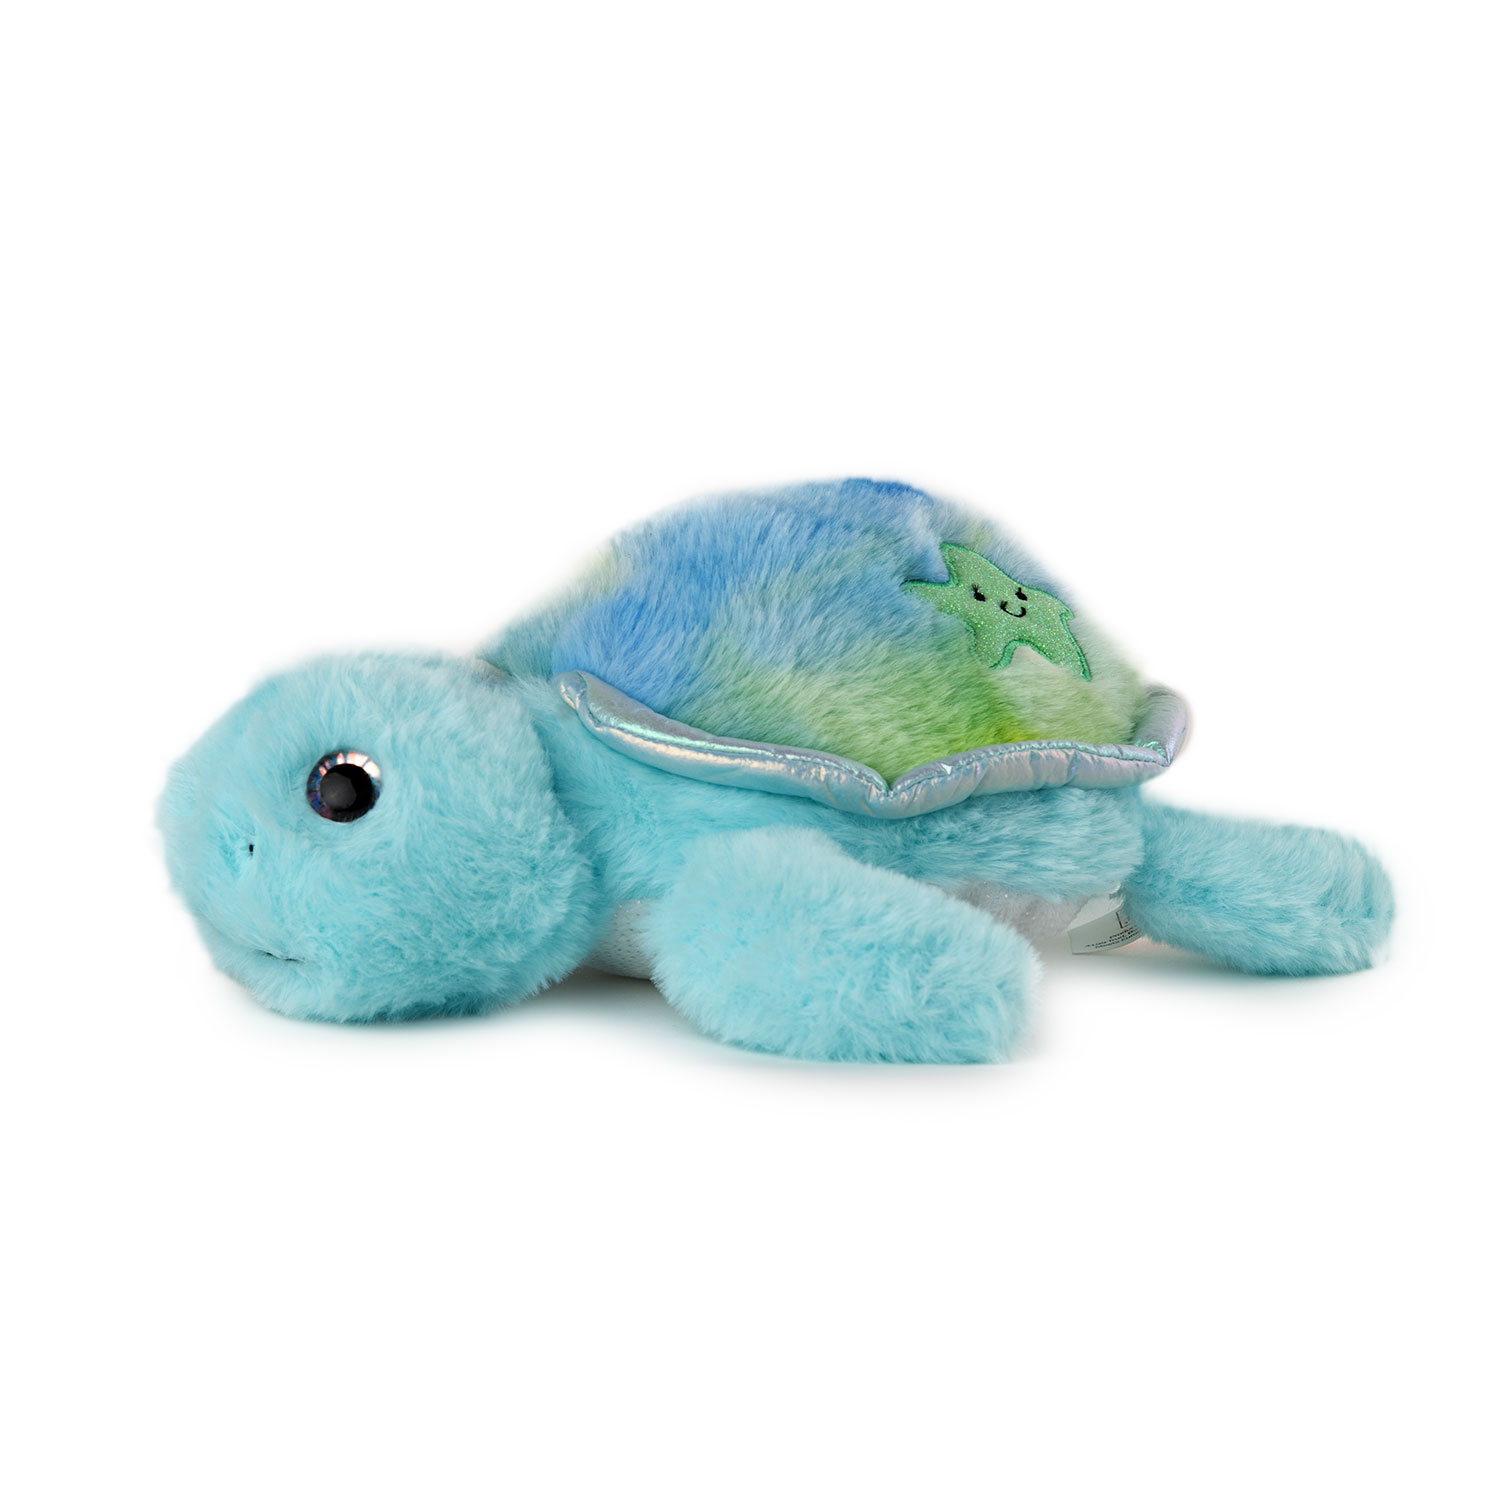 Turtle - Blue